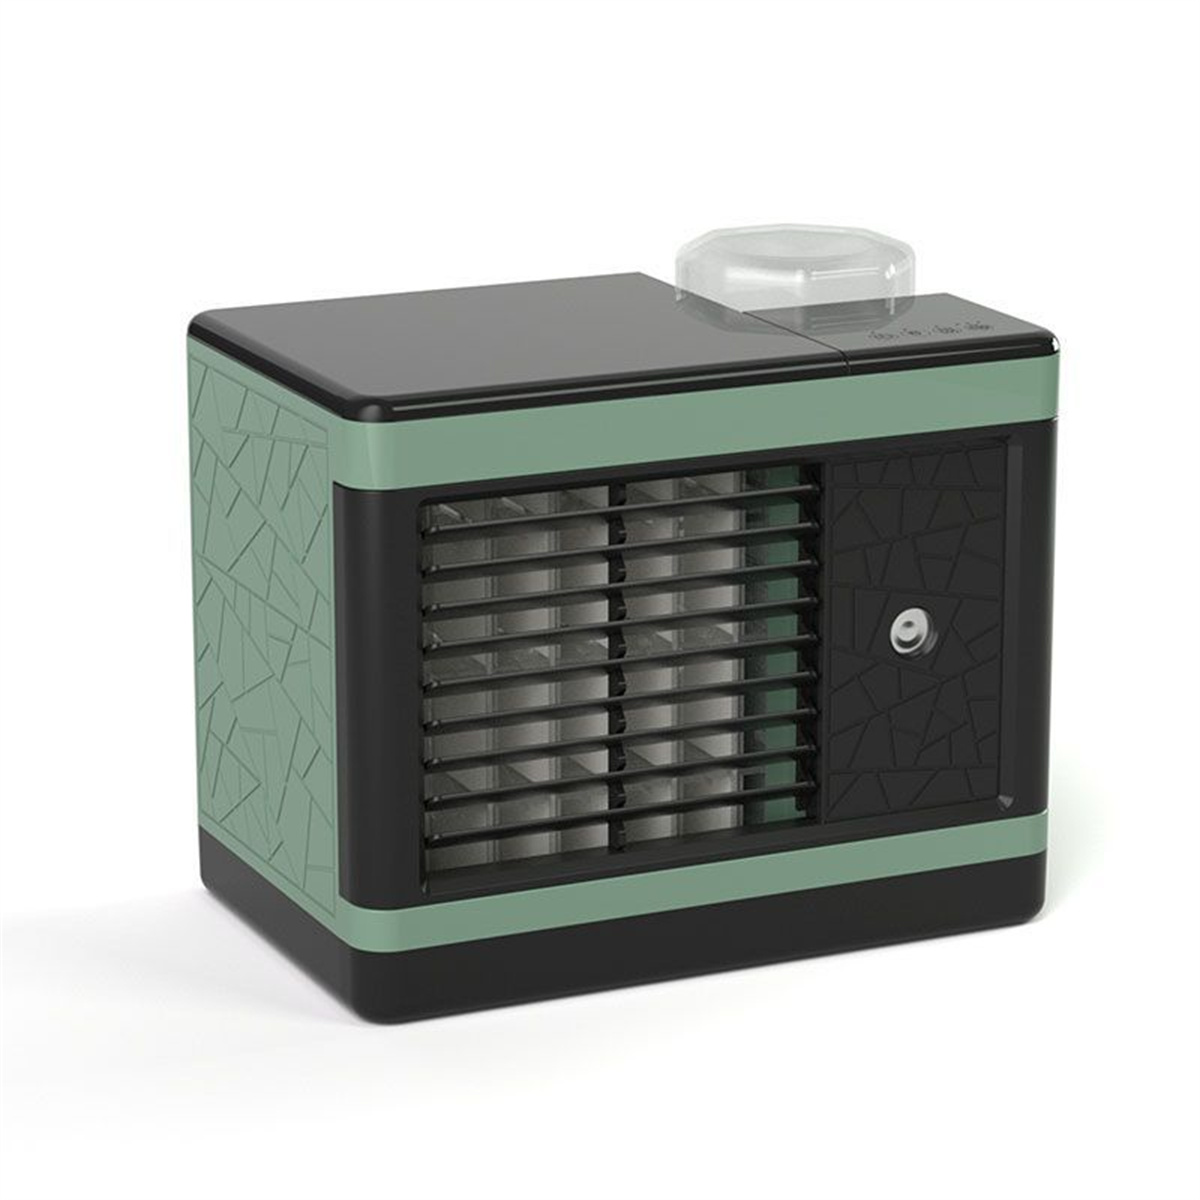 SYNTEK Fan Green Befeuchteter tragbarer Kompaktventilator Desktop-Kühler Grün